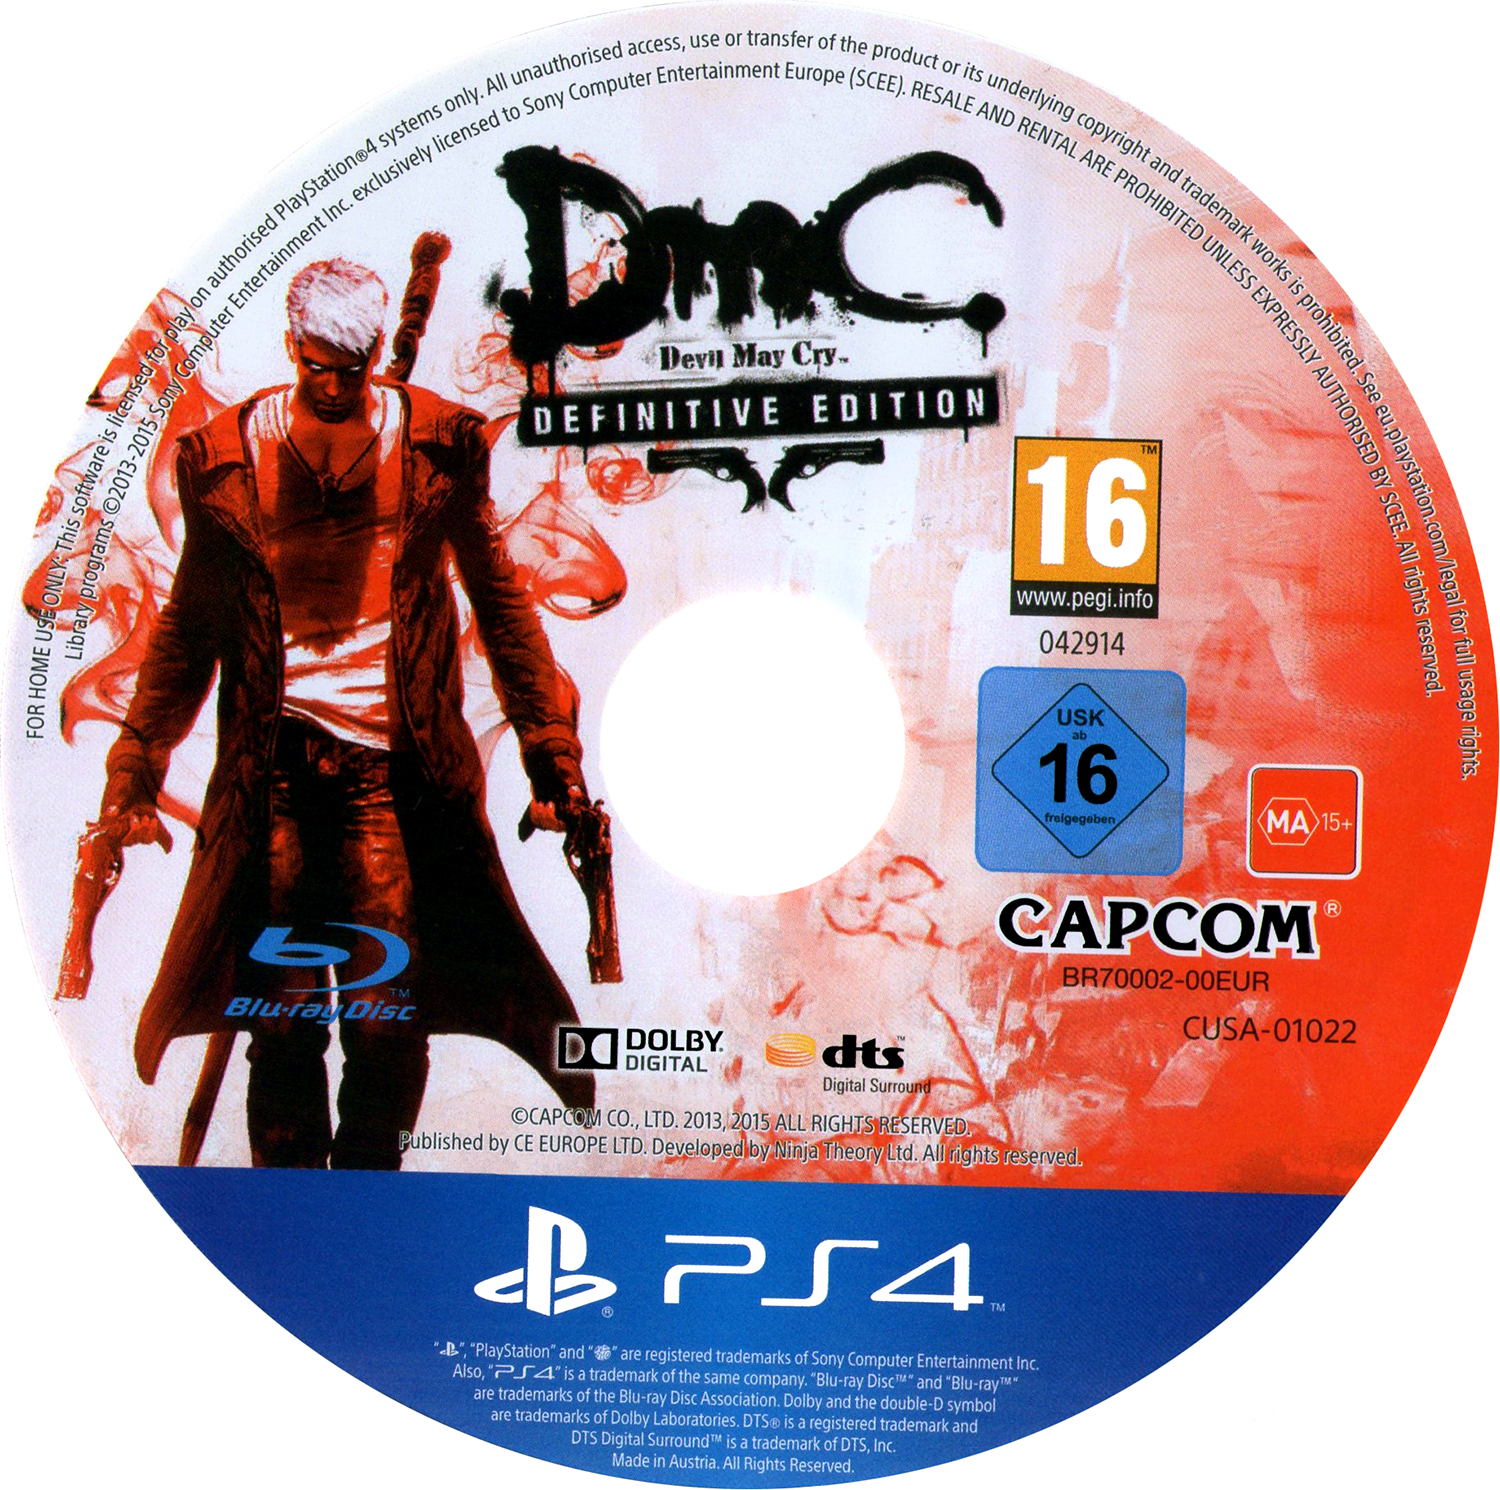 Dmc код. Диск для ps4 DMC: Devil May Cry. DMC Definitive Edition обложка. Девил май край 4 на пс4. Девил май край диск на ПС 4.